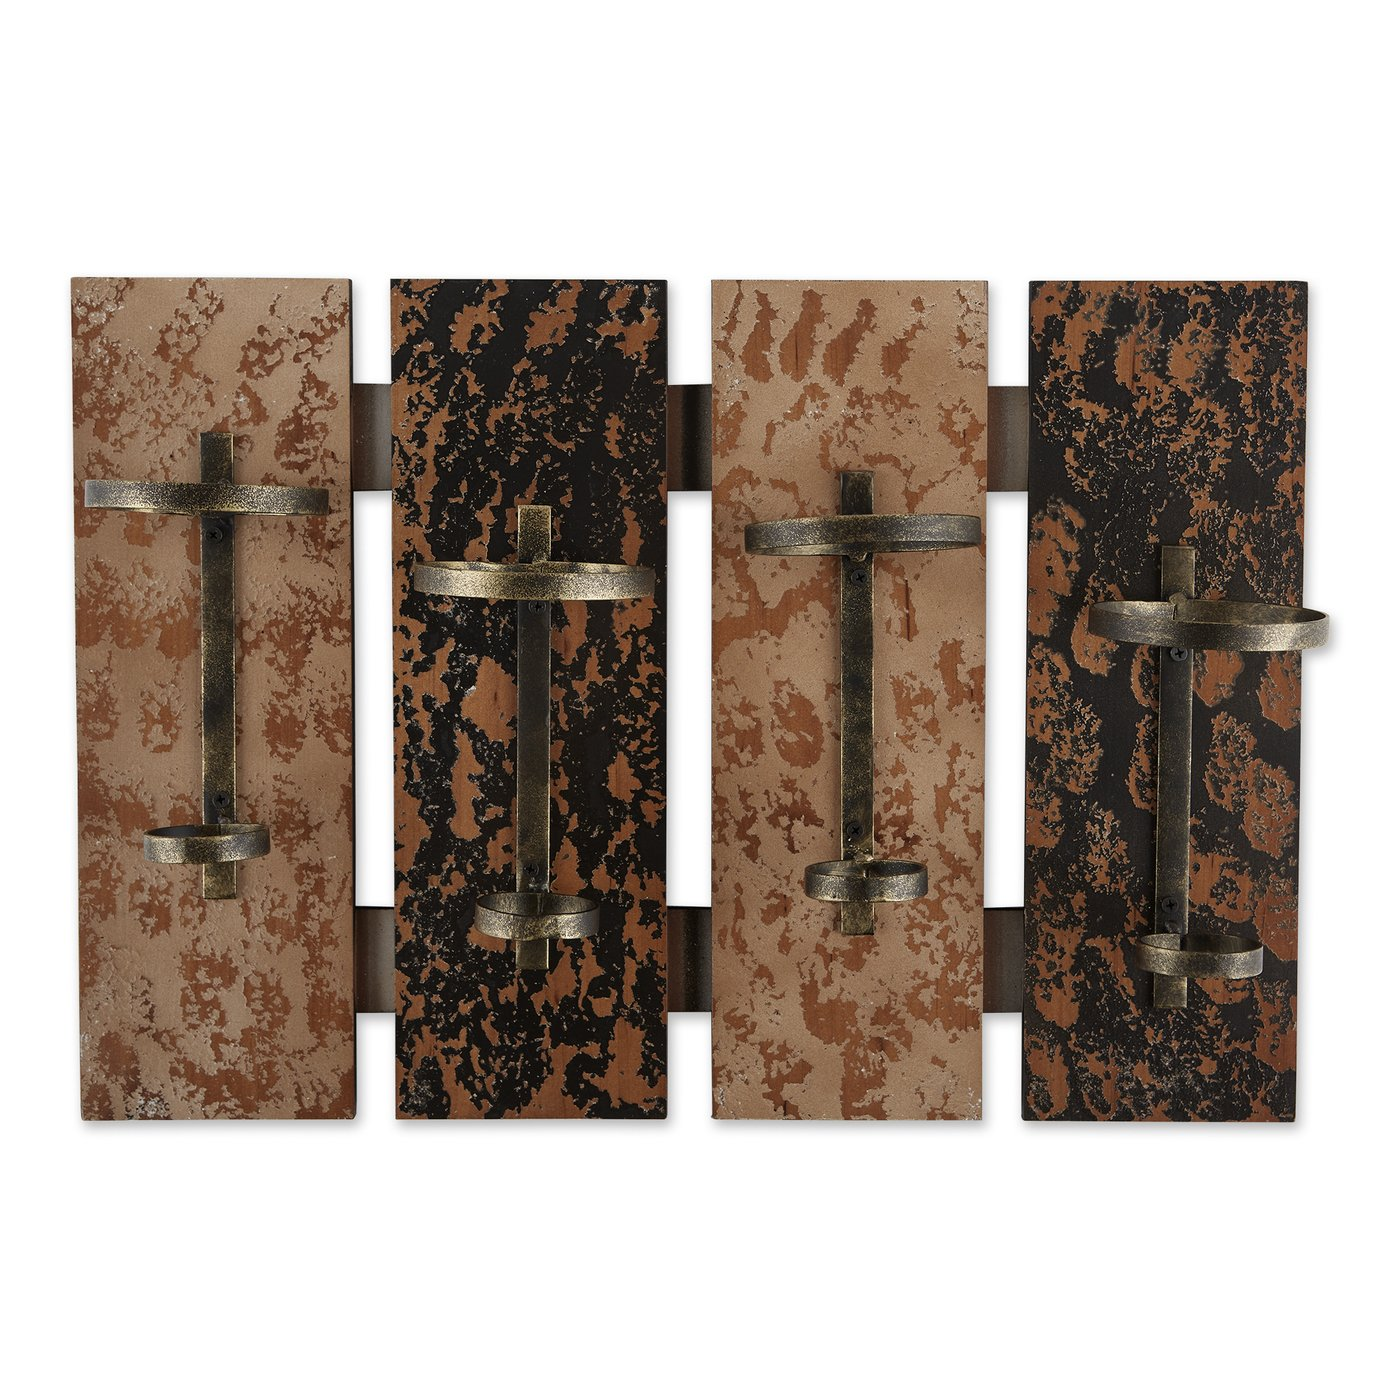 Four-Bottle Rustic Wood Wall-Mounted Wine Rack